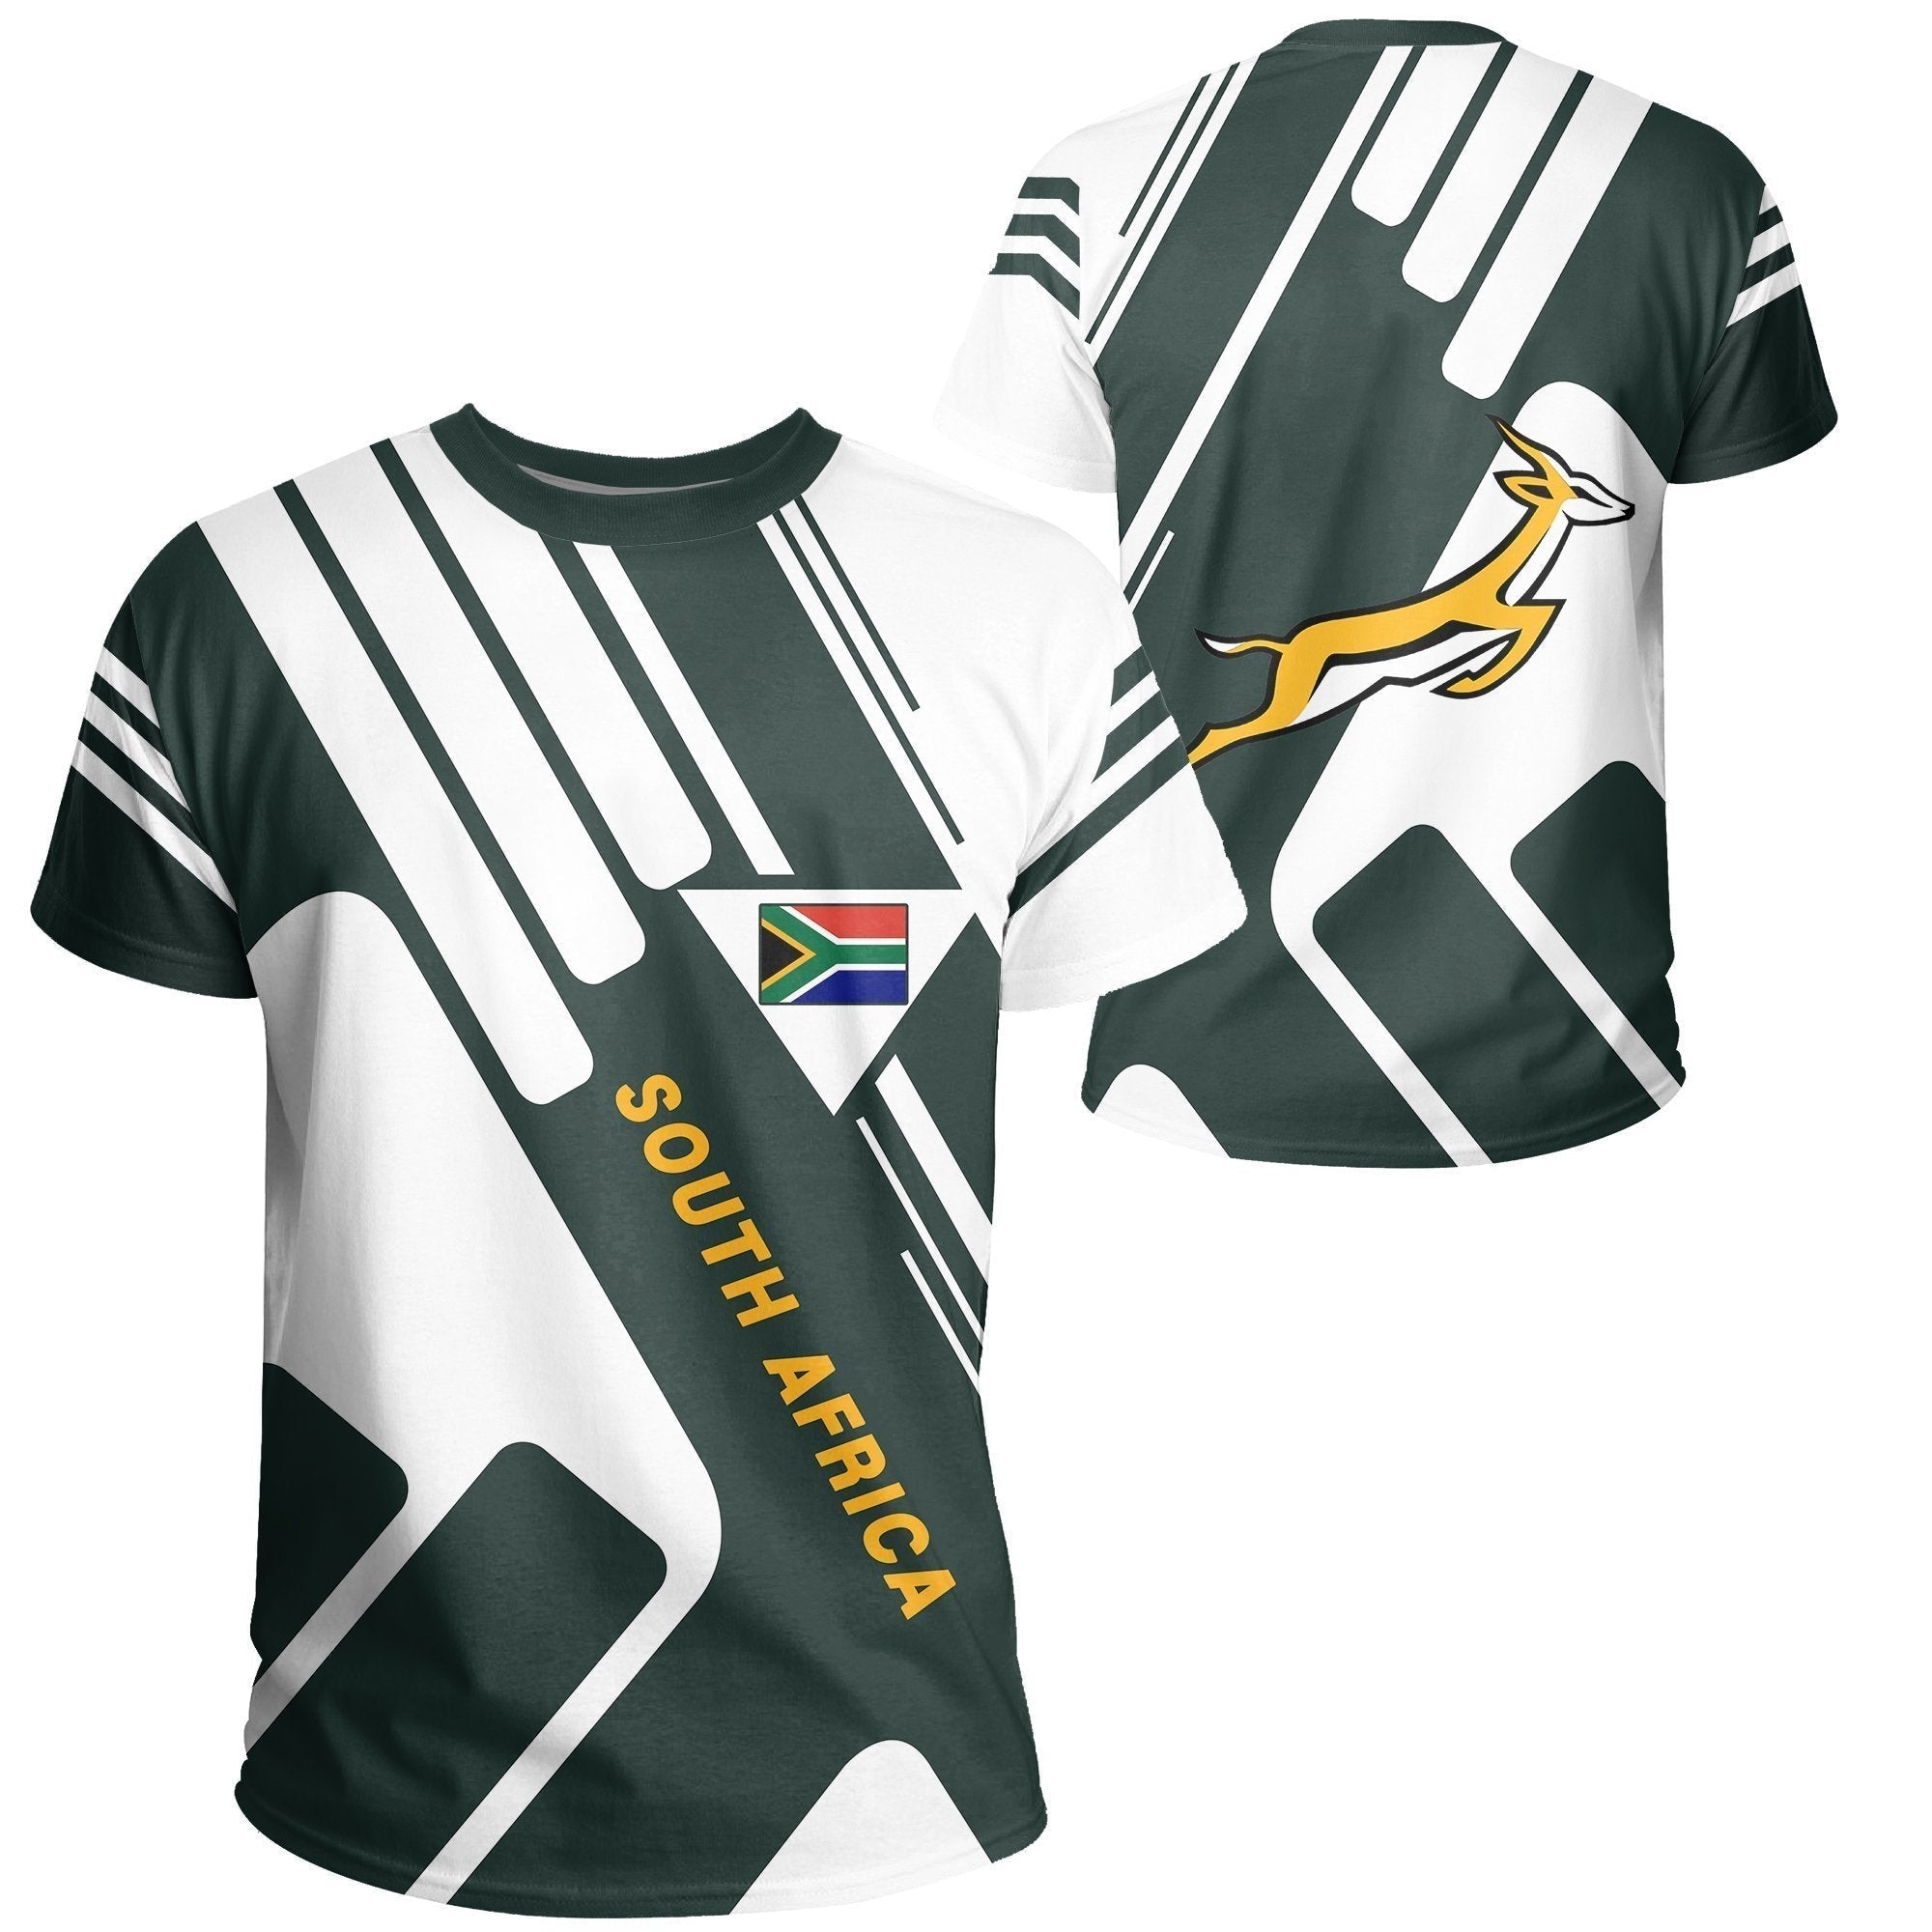 wonder-print-shop-t-shirt-south-africa-tee-springbok-kt-rolster-style